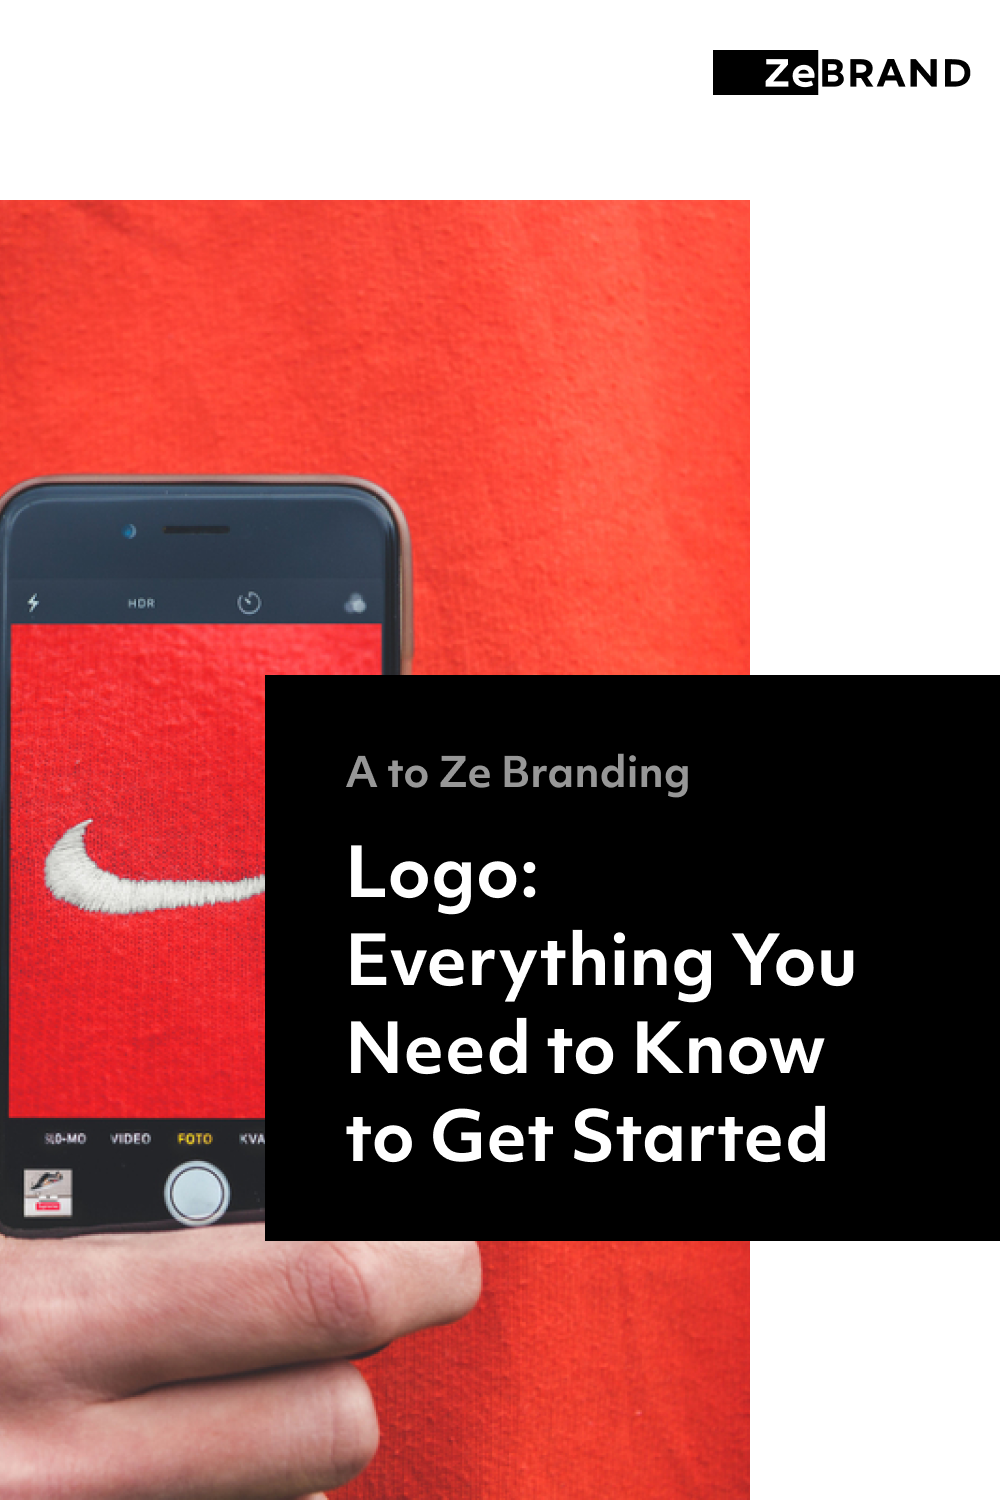 Nike's logomark with Nike's wings